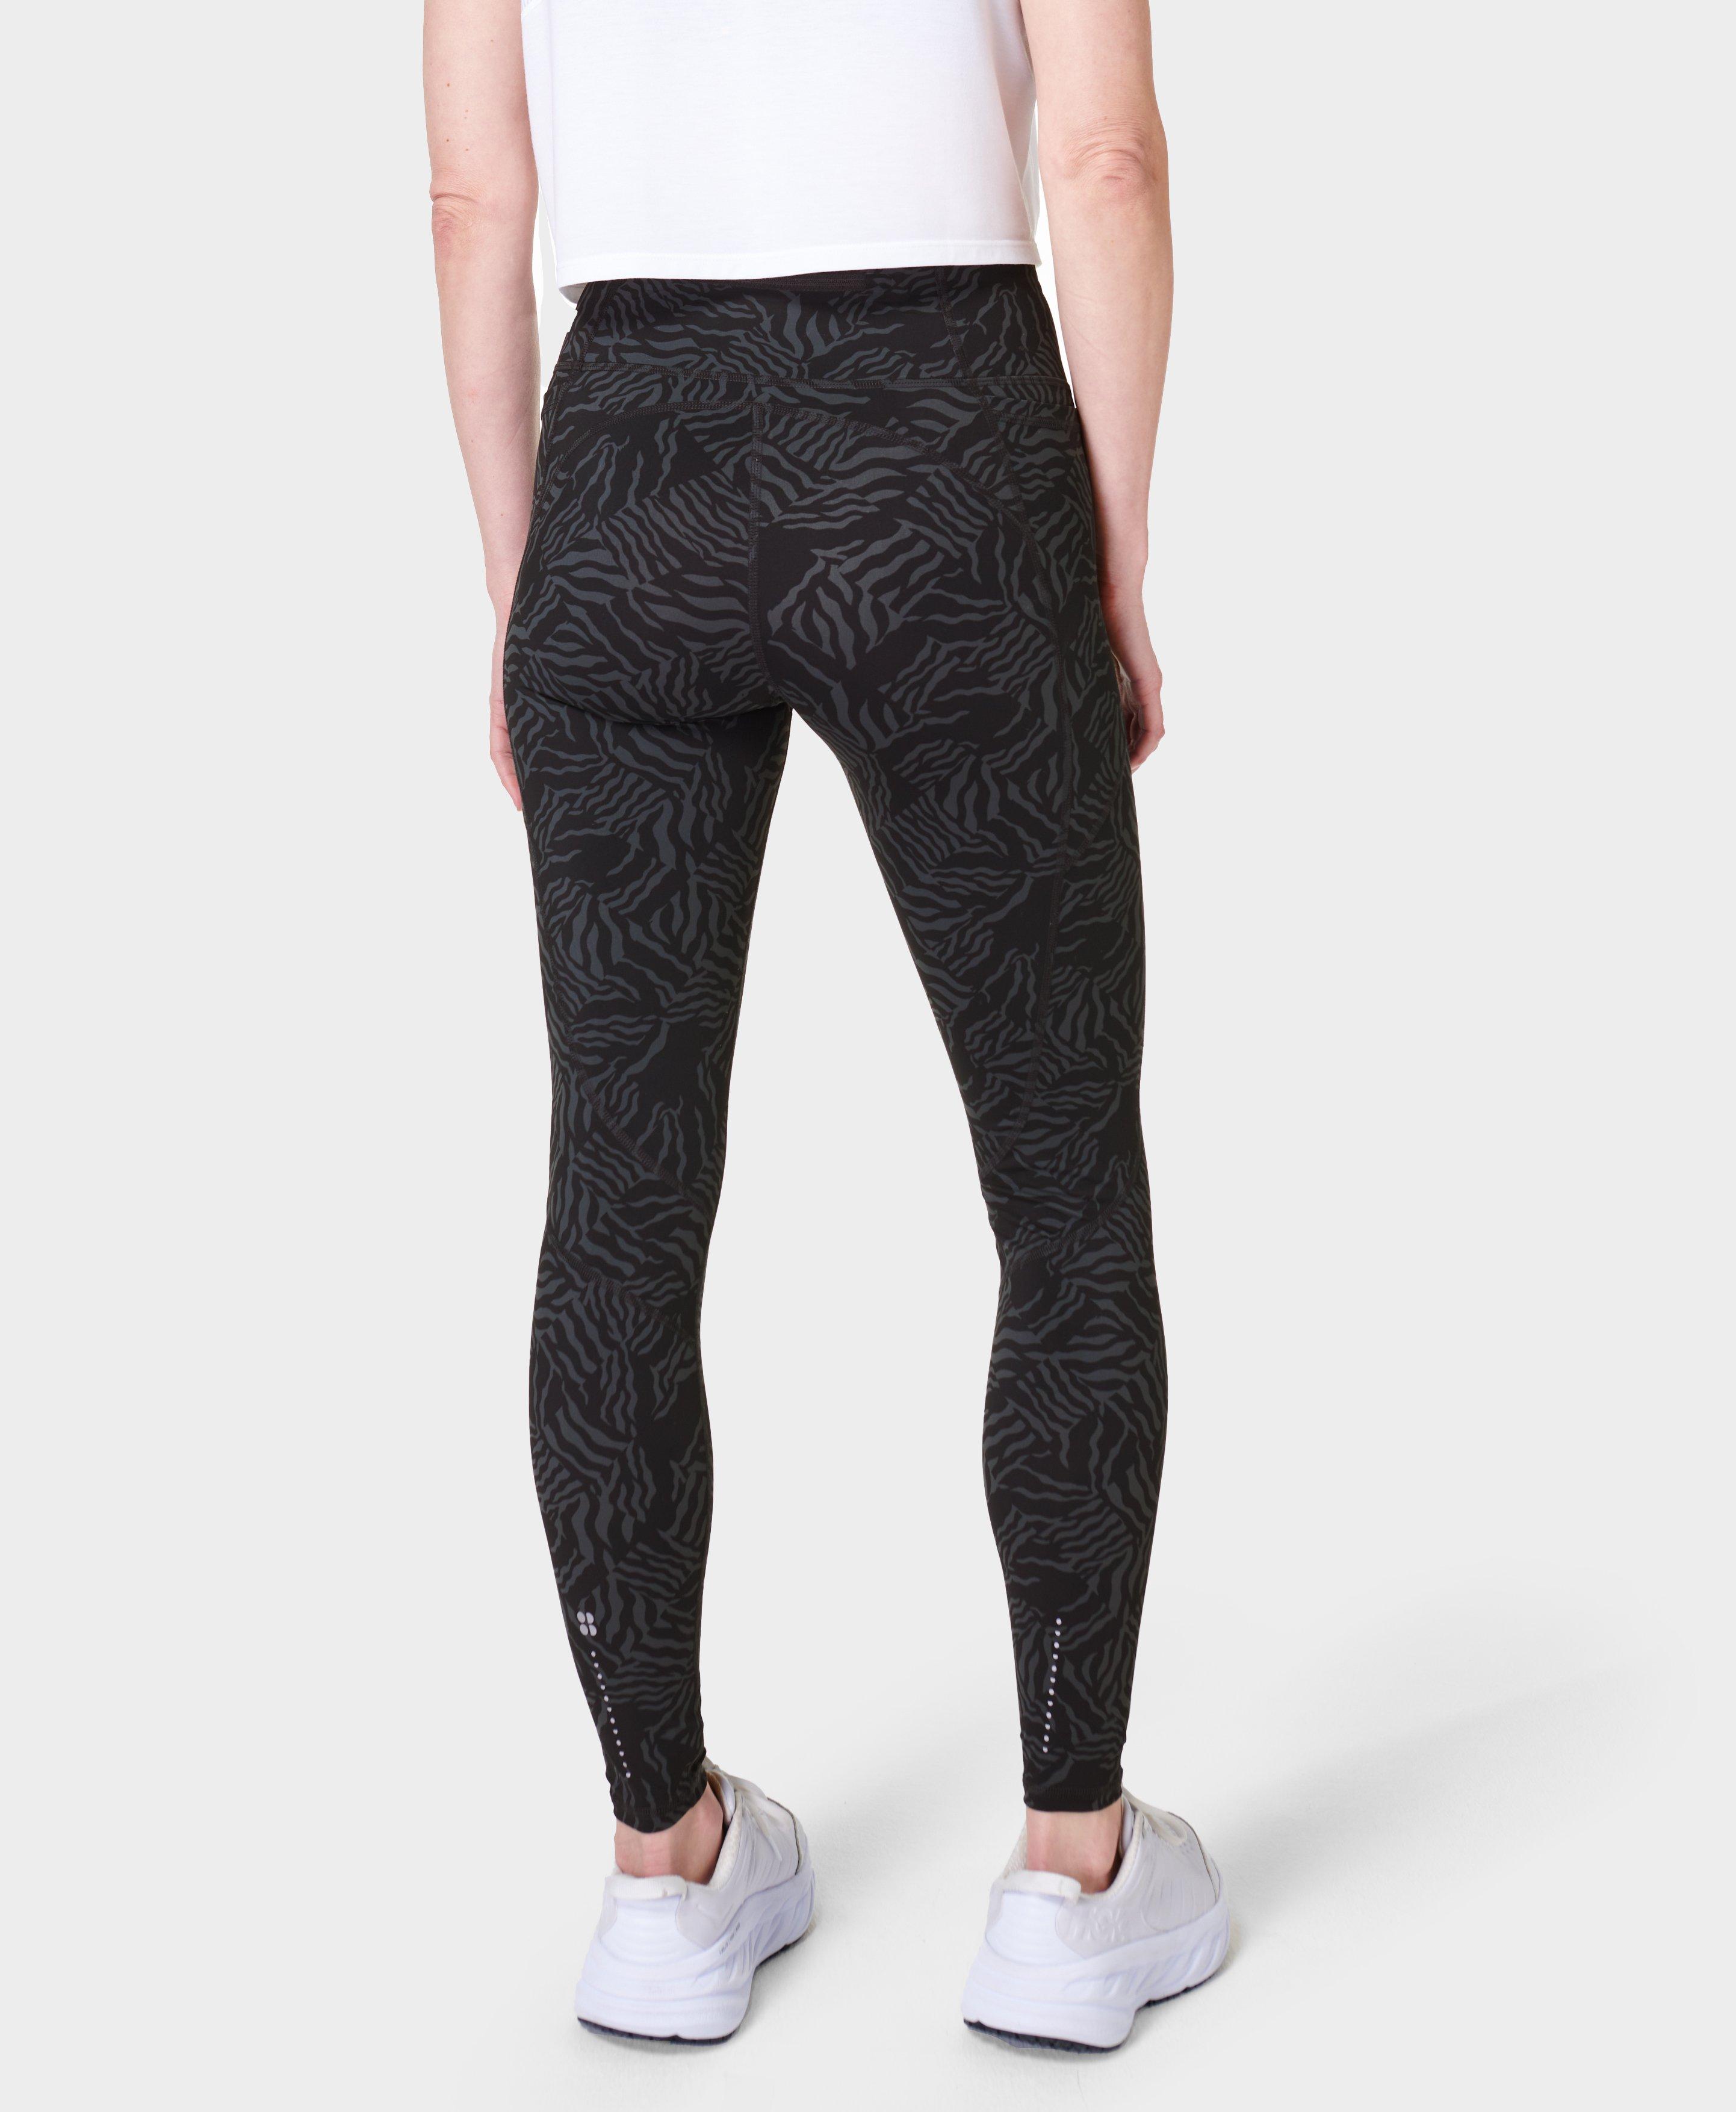 Yoga Capris Women Grey Zebra Print Best Yoga Pants Pilates